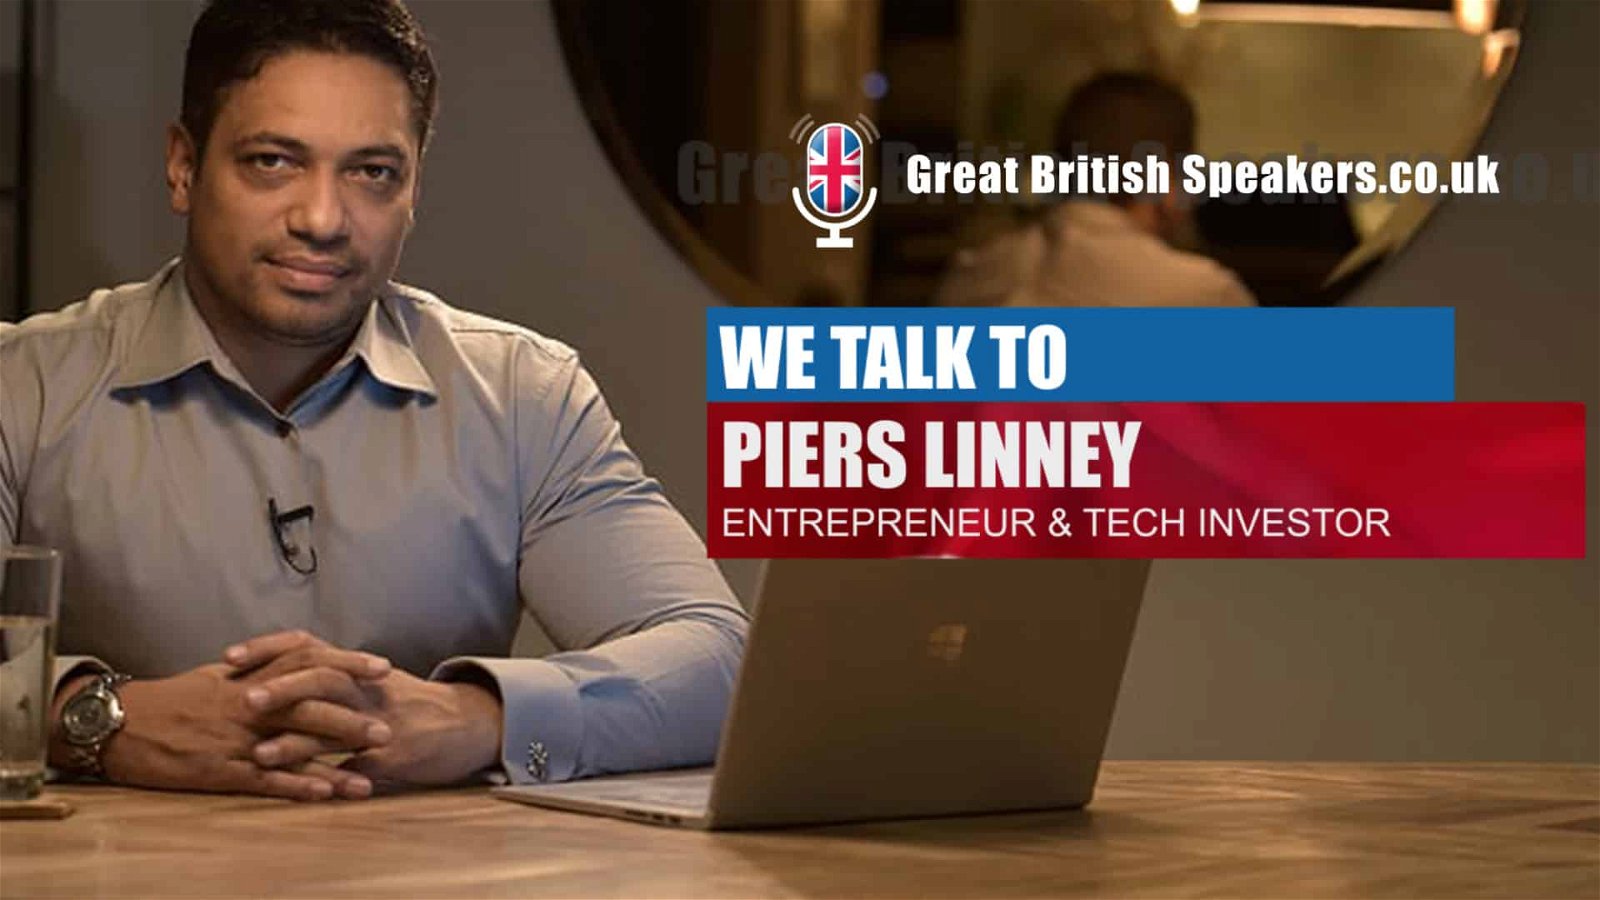 Piers Linney, tech and entrepreneur speaker at Great British Speakers